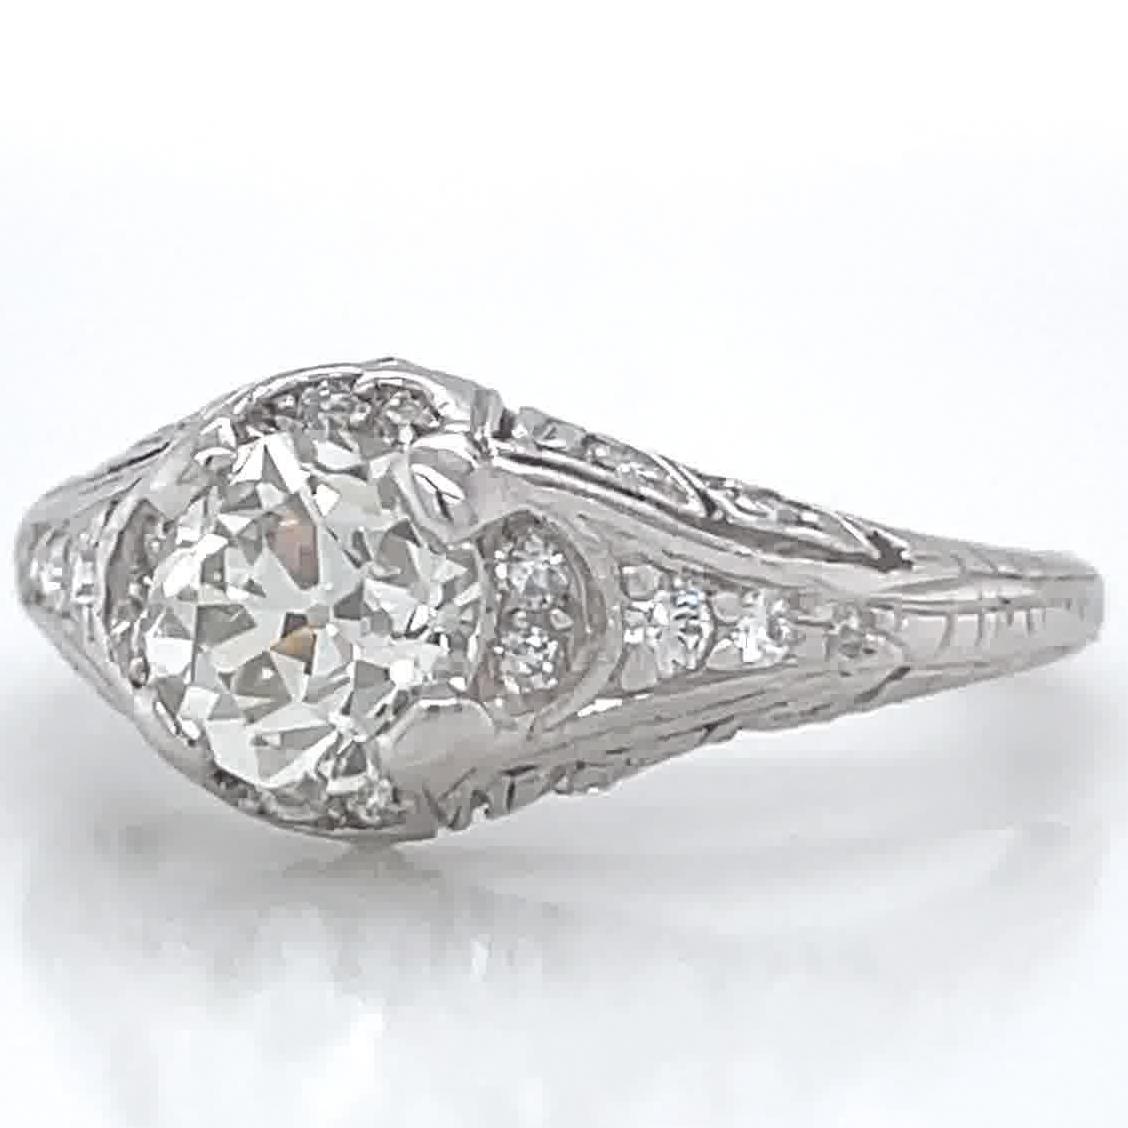 Women's Art Deco GIA Old European Cut Diamond Platinum Engagement Ring